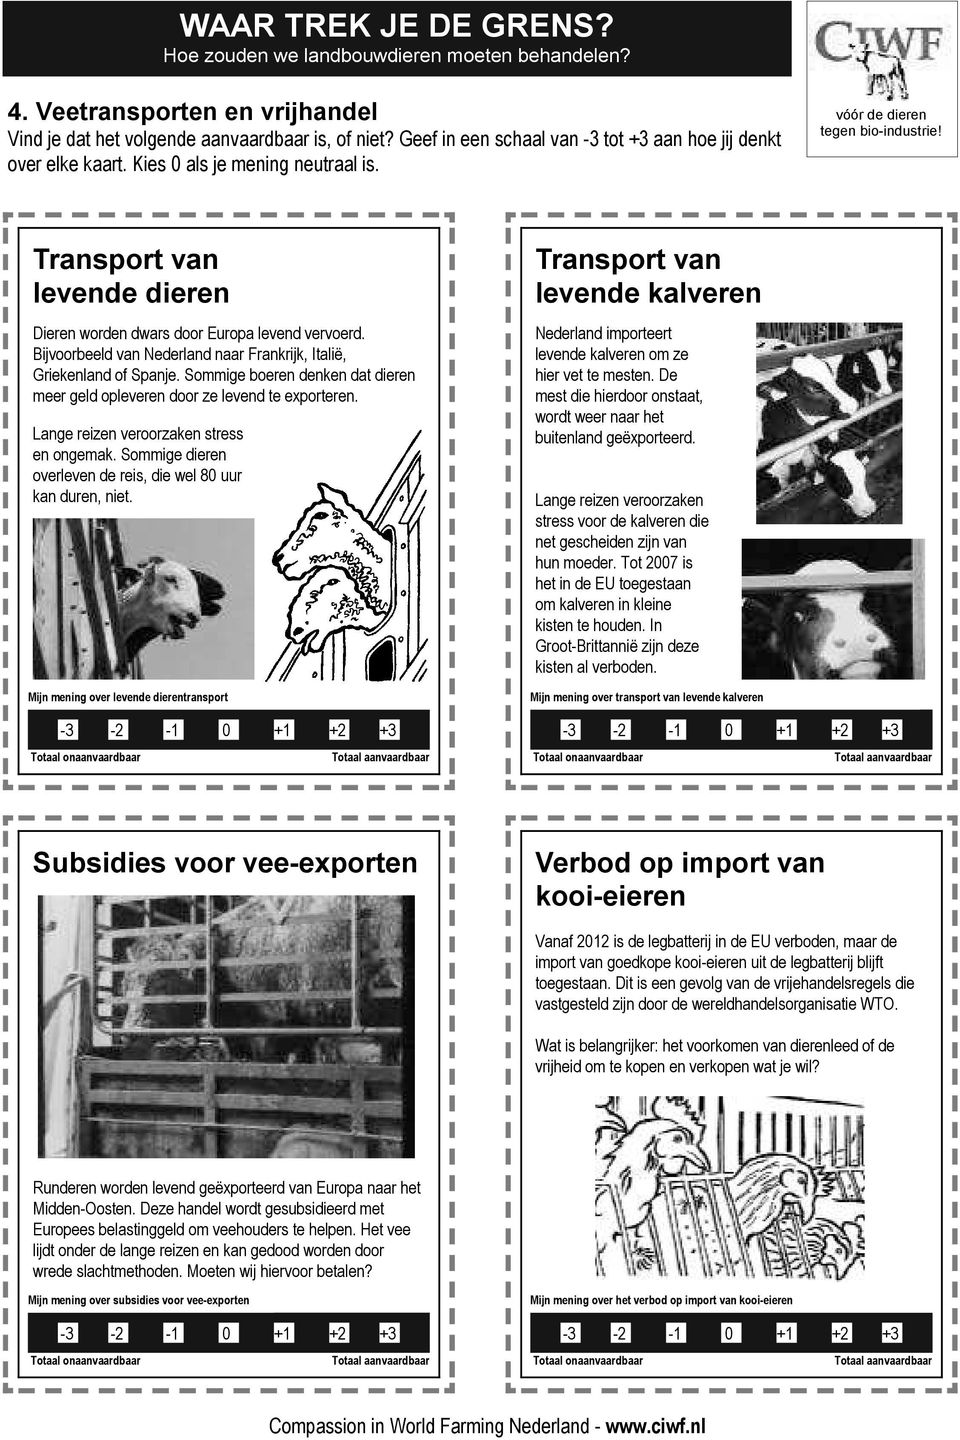 Mijn mening over levende dierentransport Transport van levende kalveren Nederland importeert levende kalveren om ze hier vet te mesten.